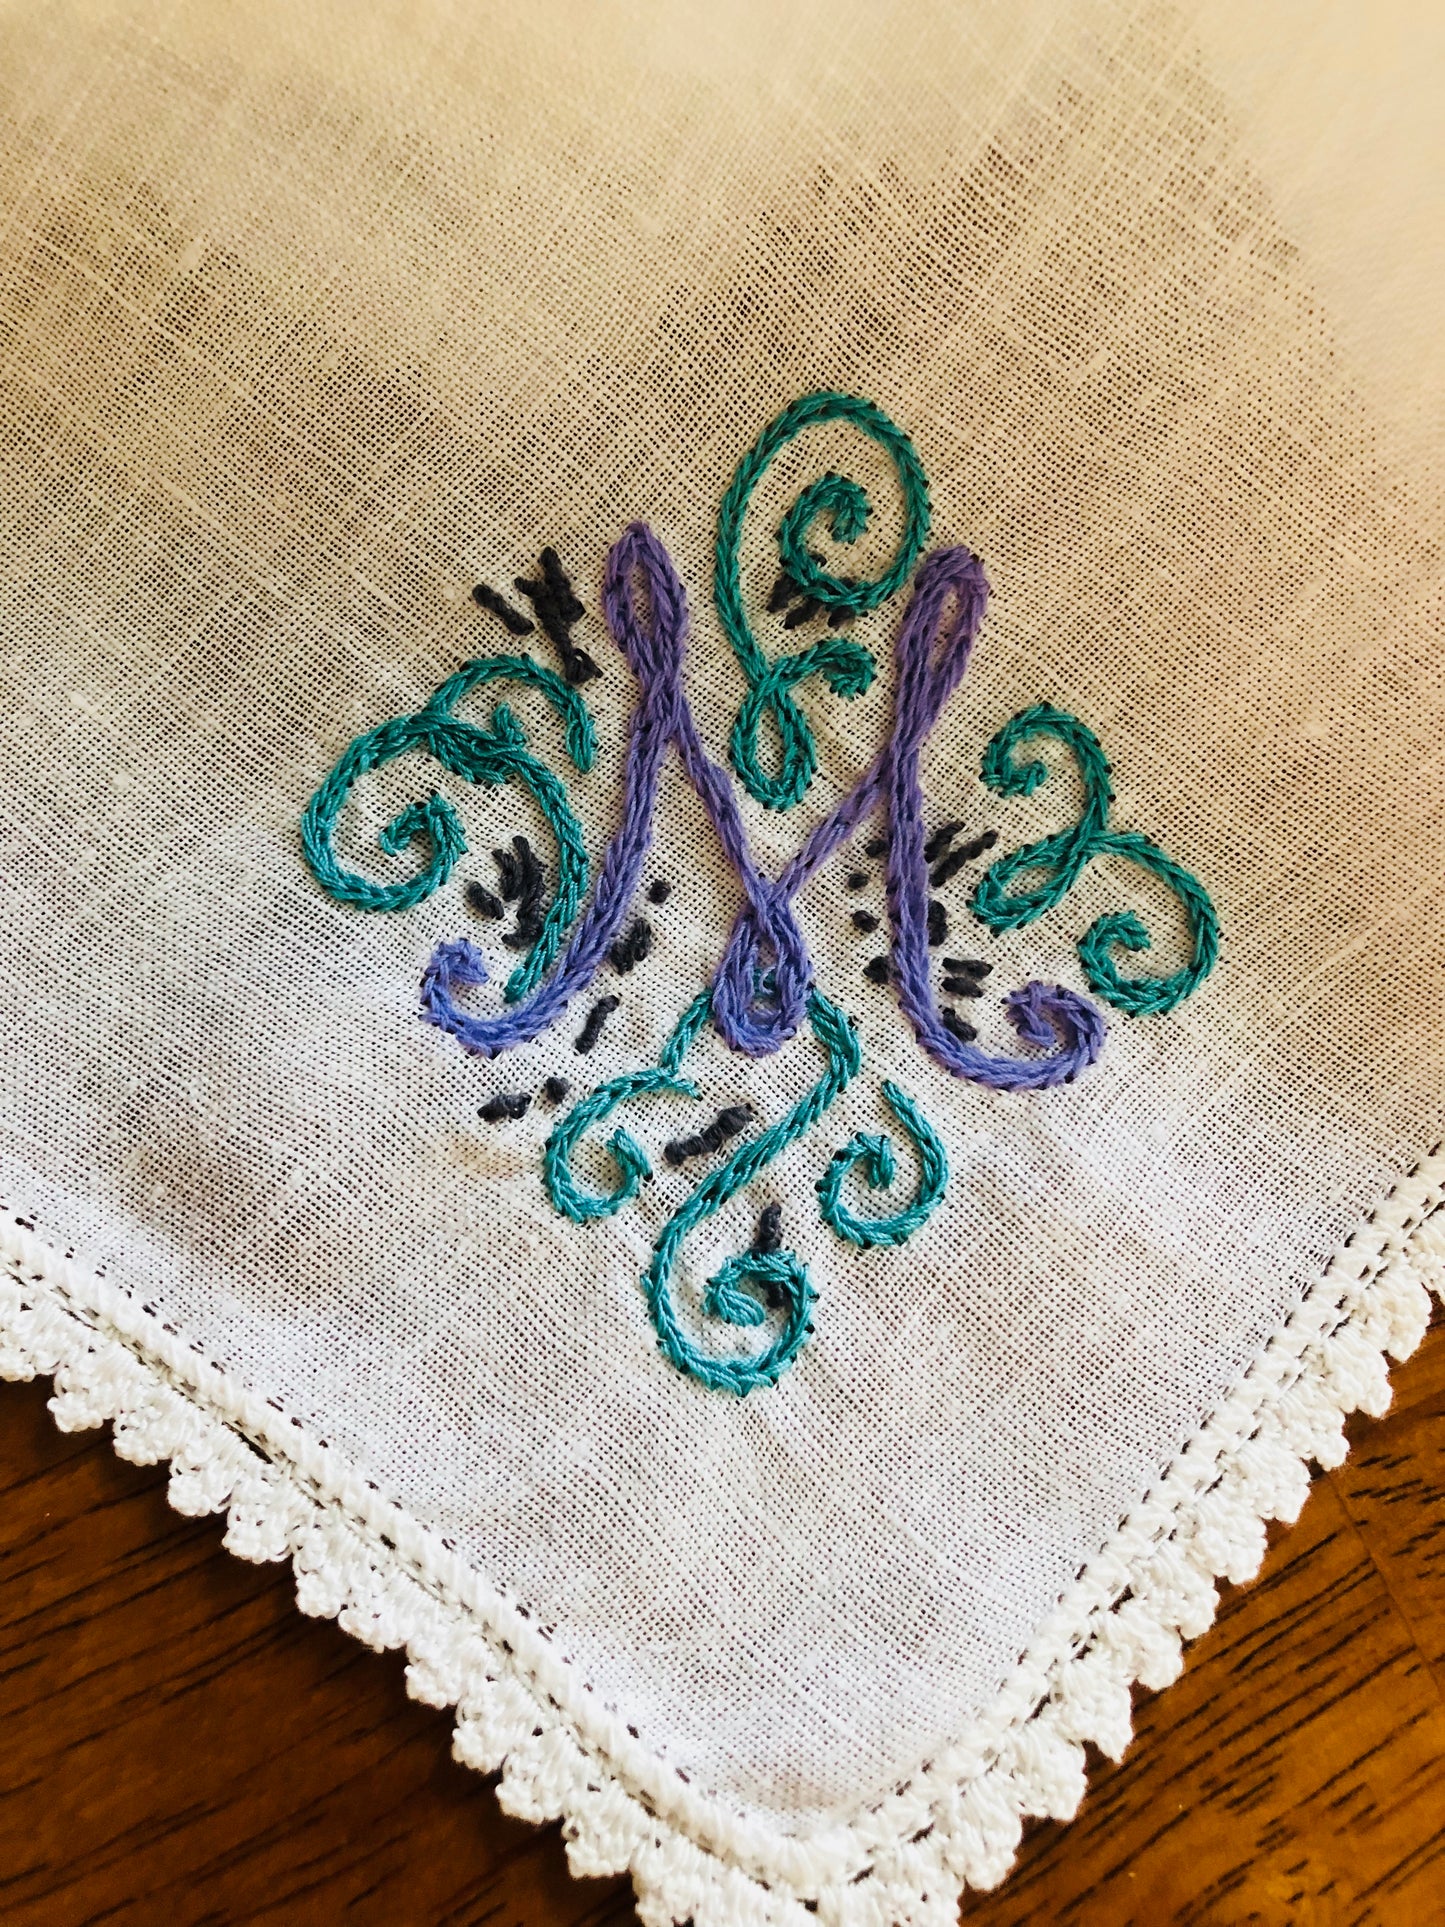 Wedding Personalized Monogram Handkerchief